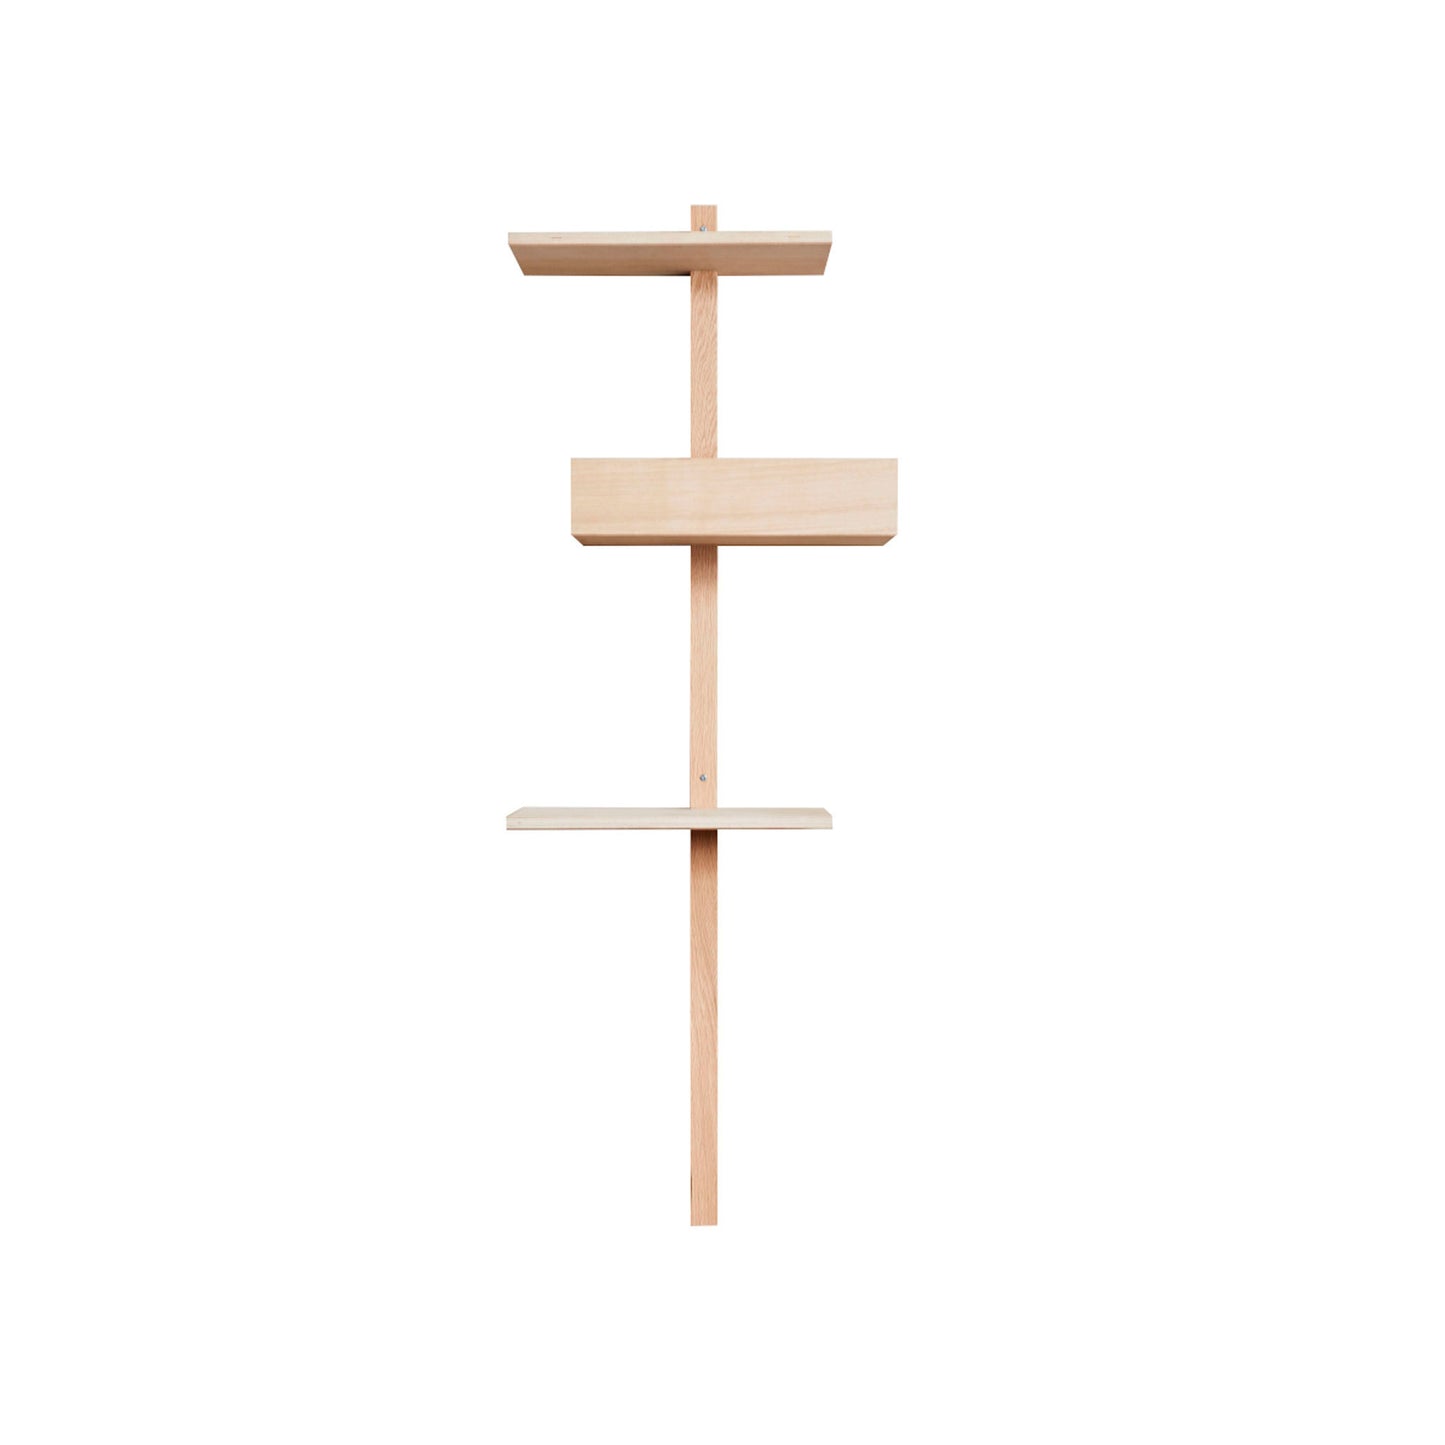 Kissapuu ladder, straight edge